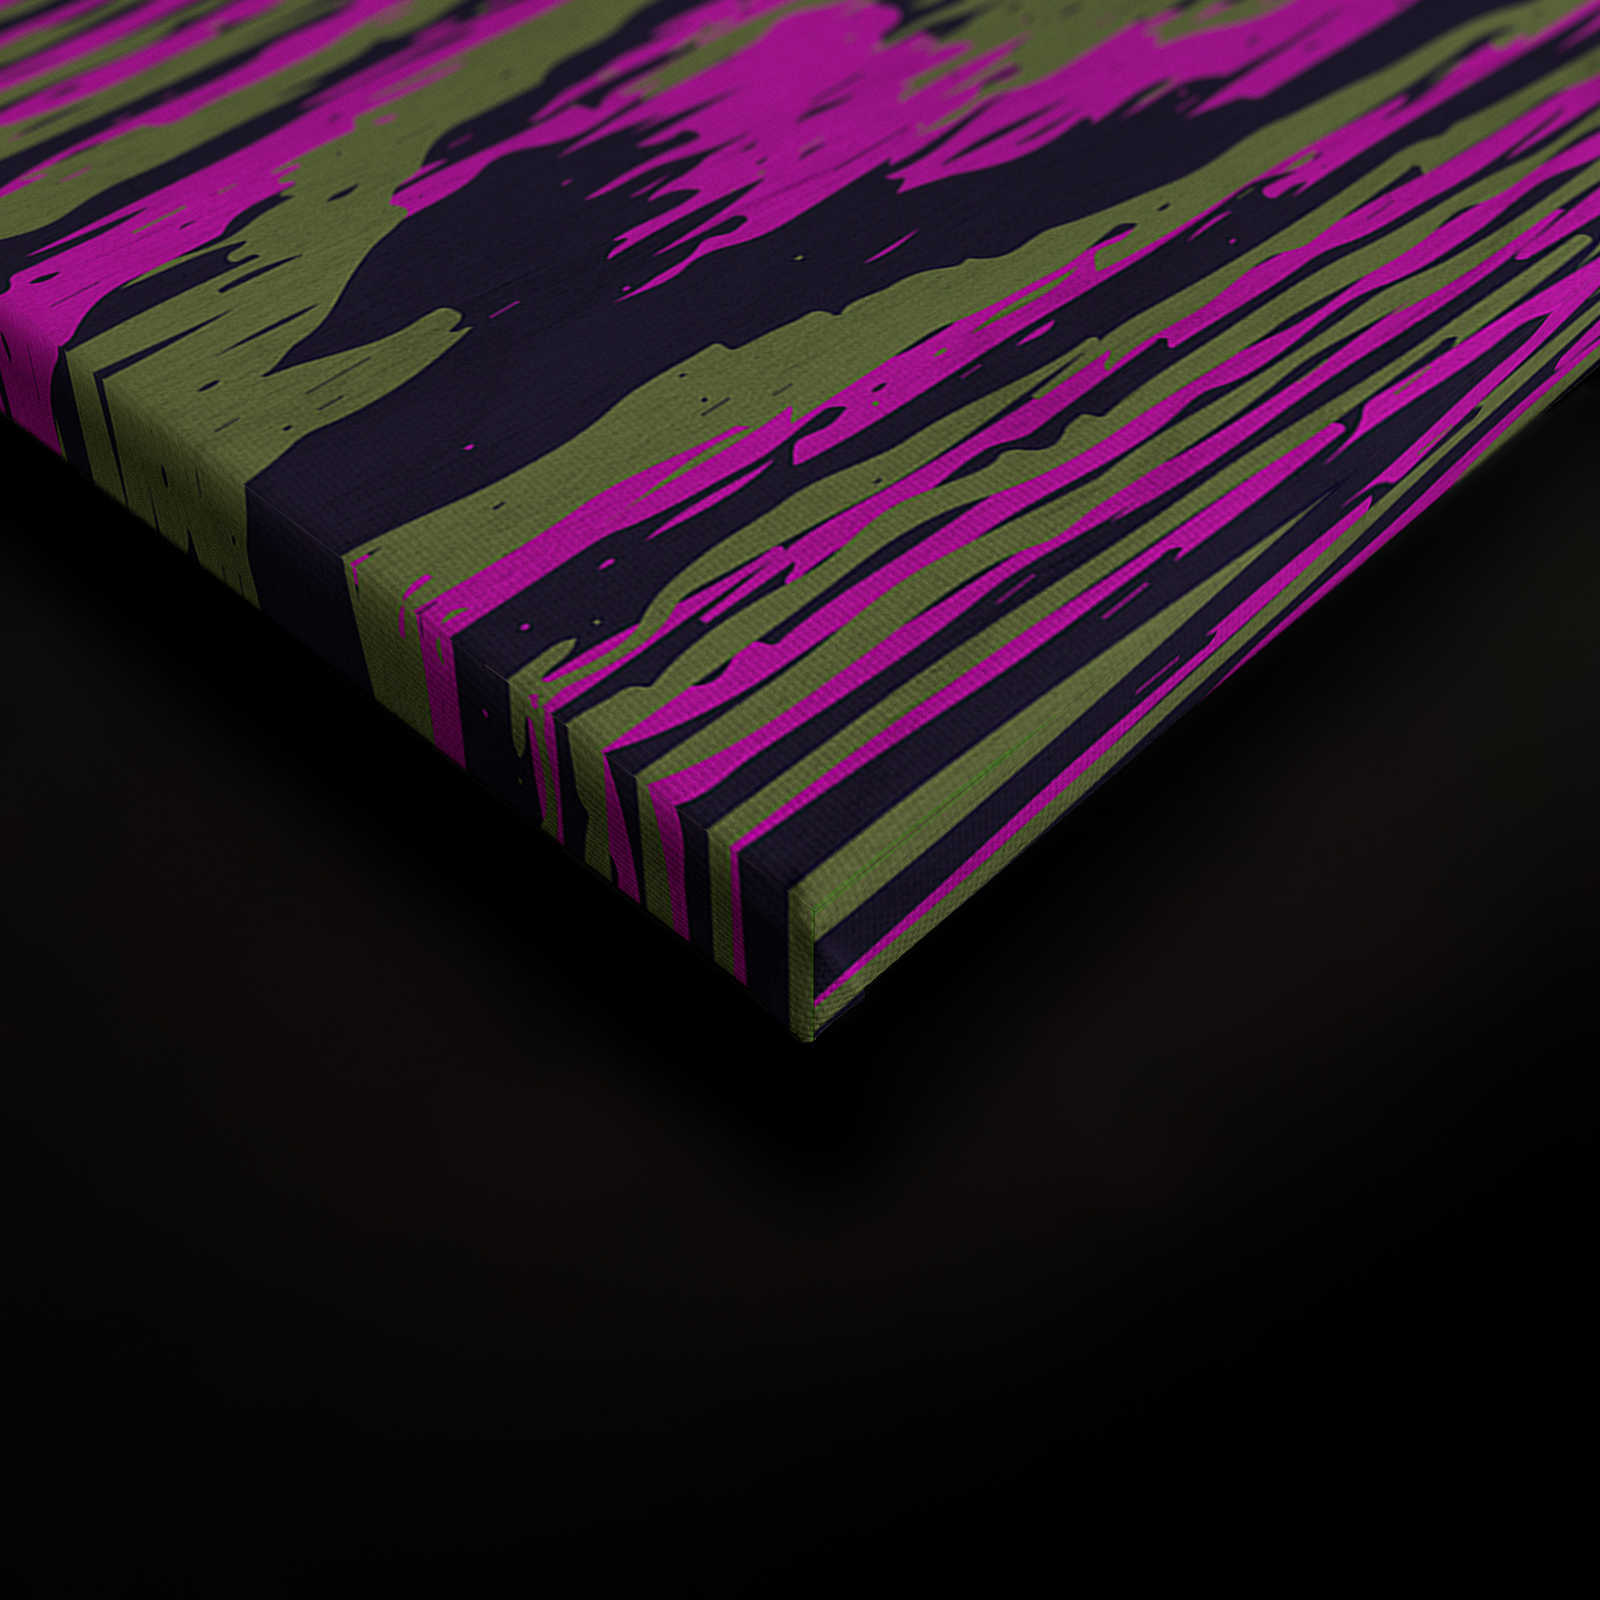             Kontiki 2 - Leinwandbild Neonfarbene Holzmaserung, Pink & Schwarz – 1,20 m x 0,80 m
        